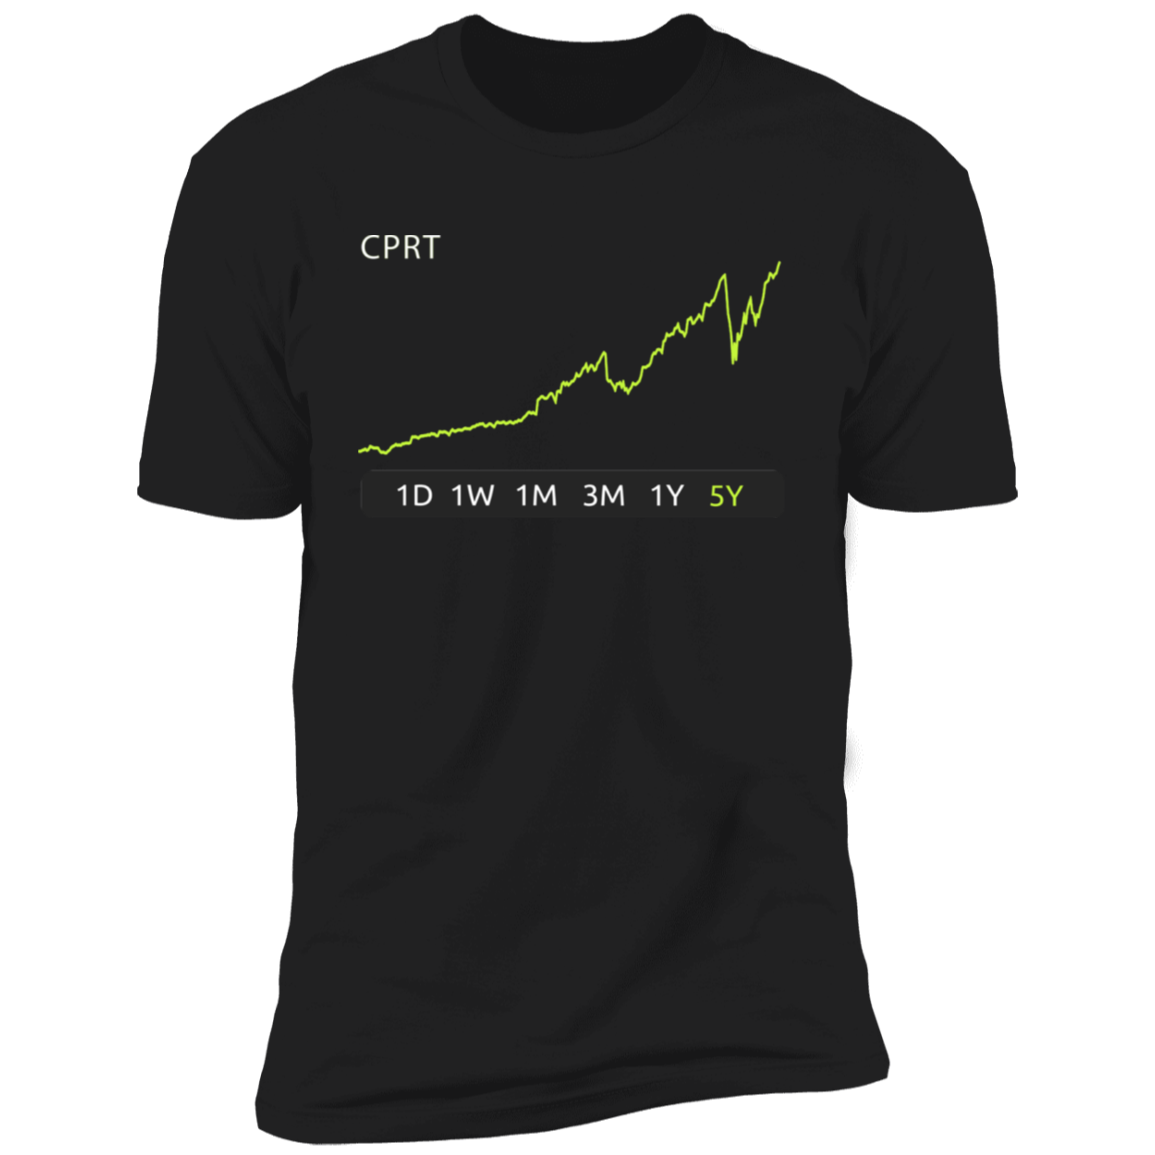 CPRT Stock 5y Premium T-Shirt